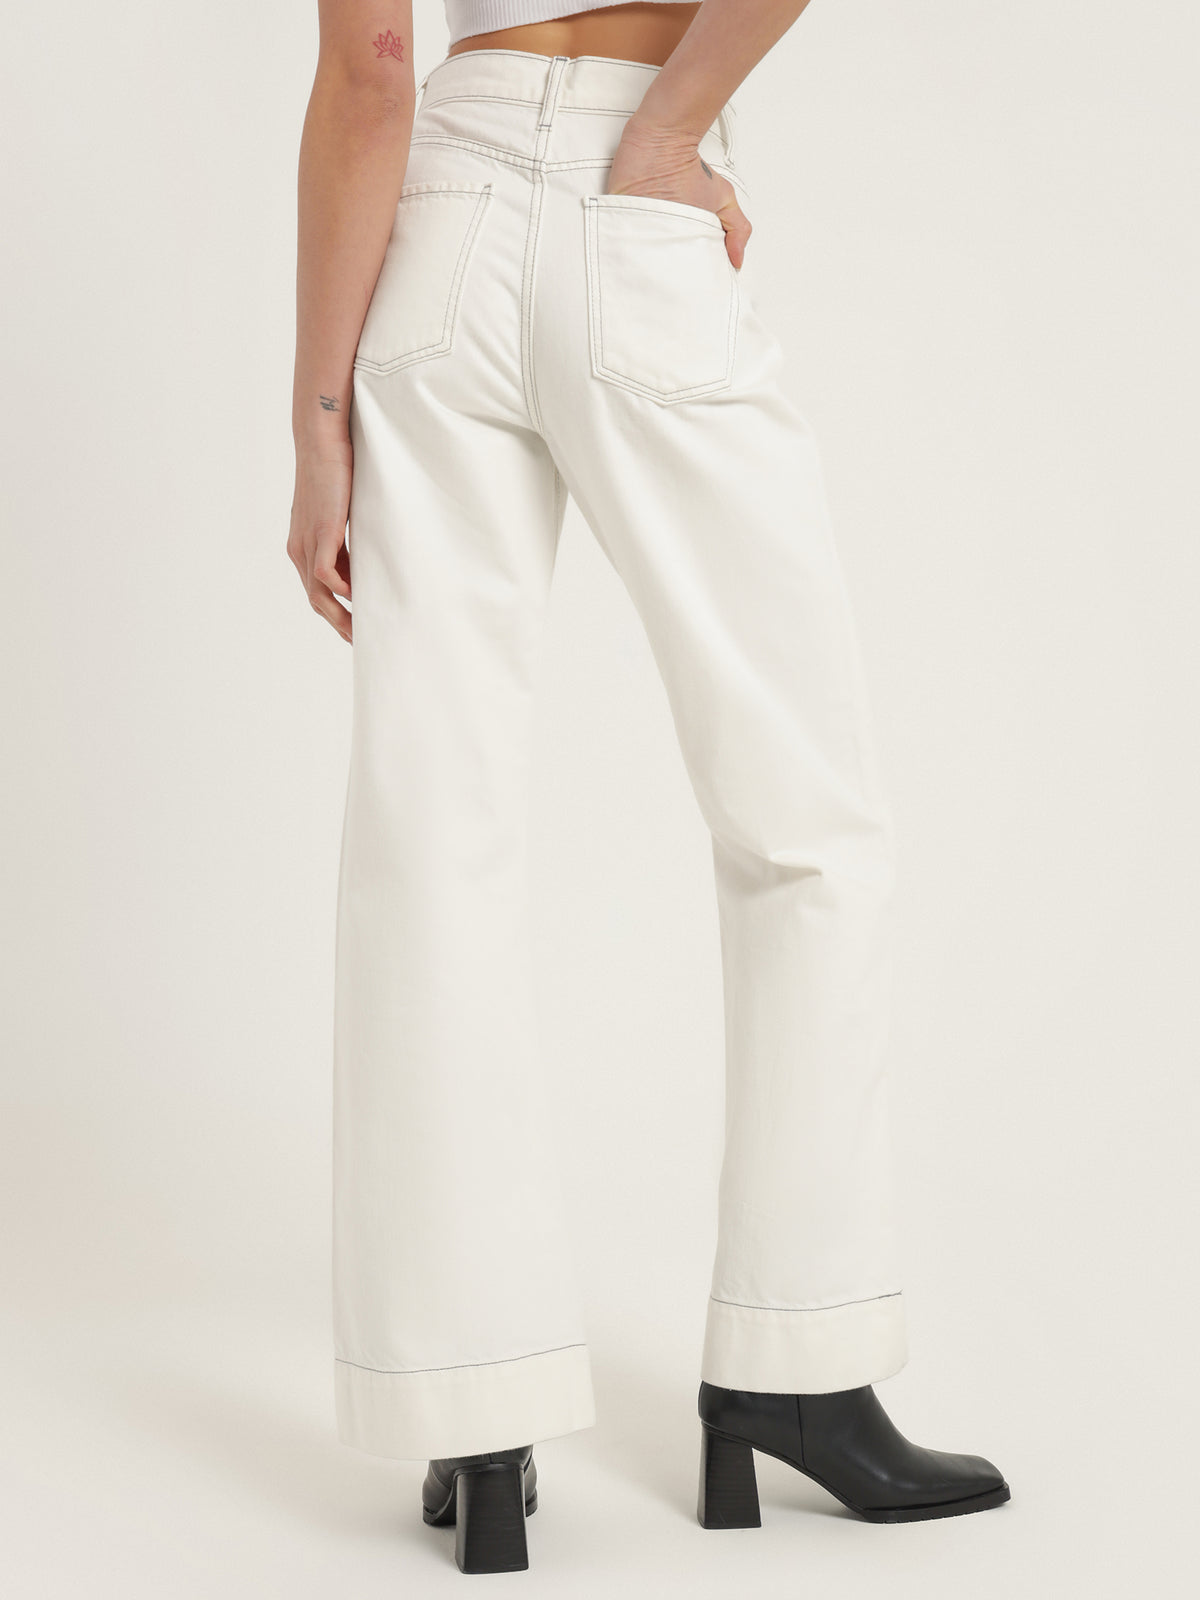 Anita Flare Jeans in Dream White